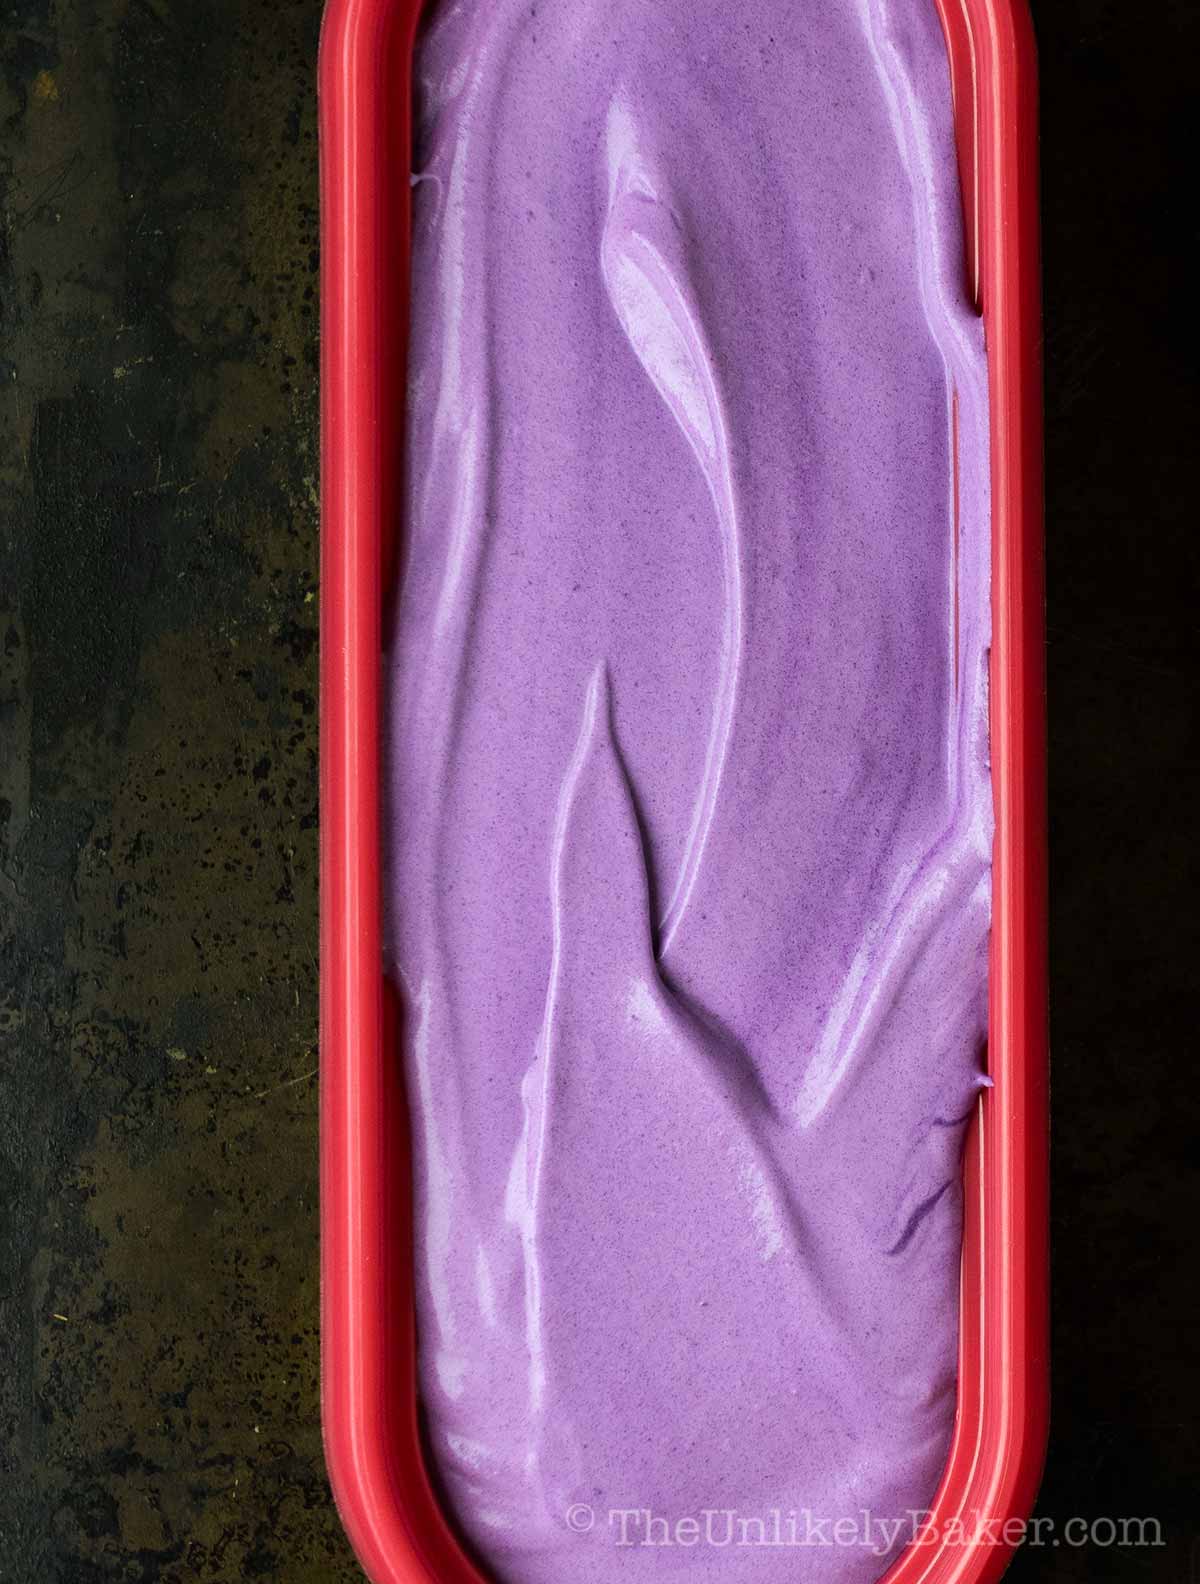 Creamy ube ice cream in an ice cream tub.